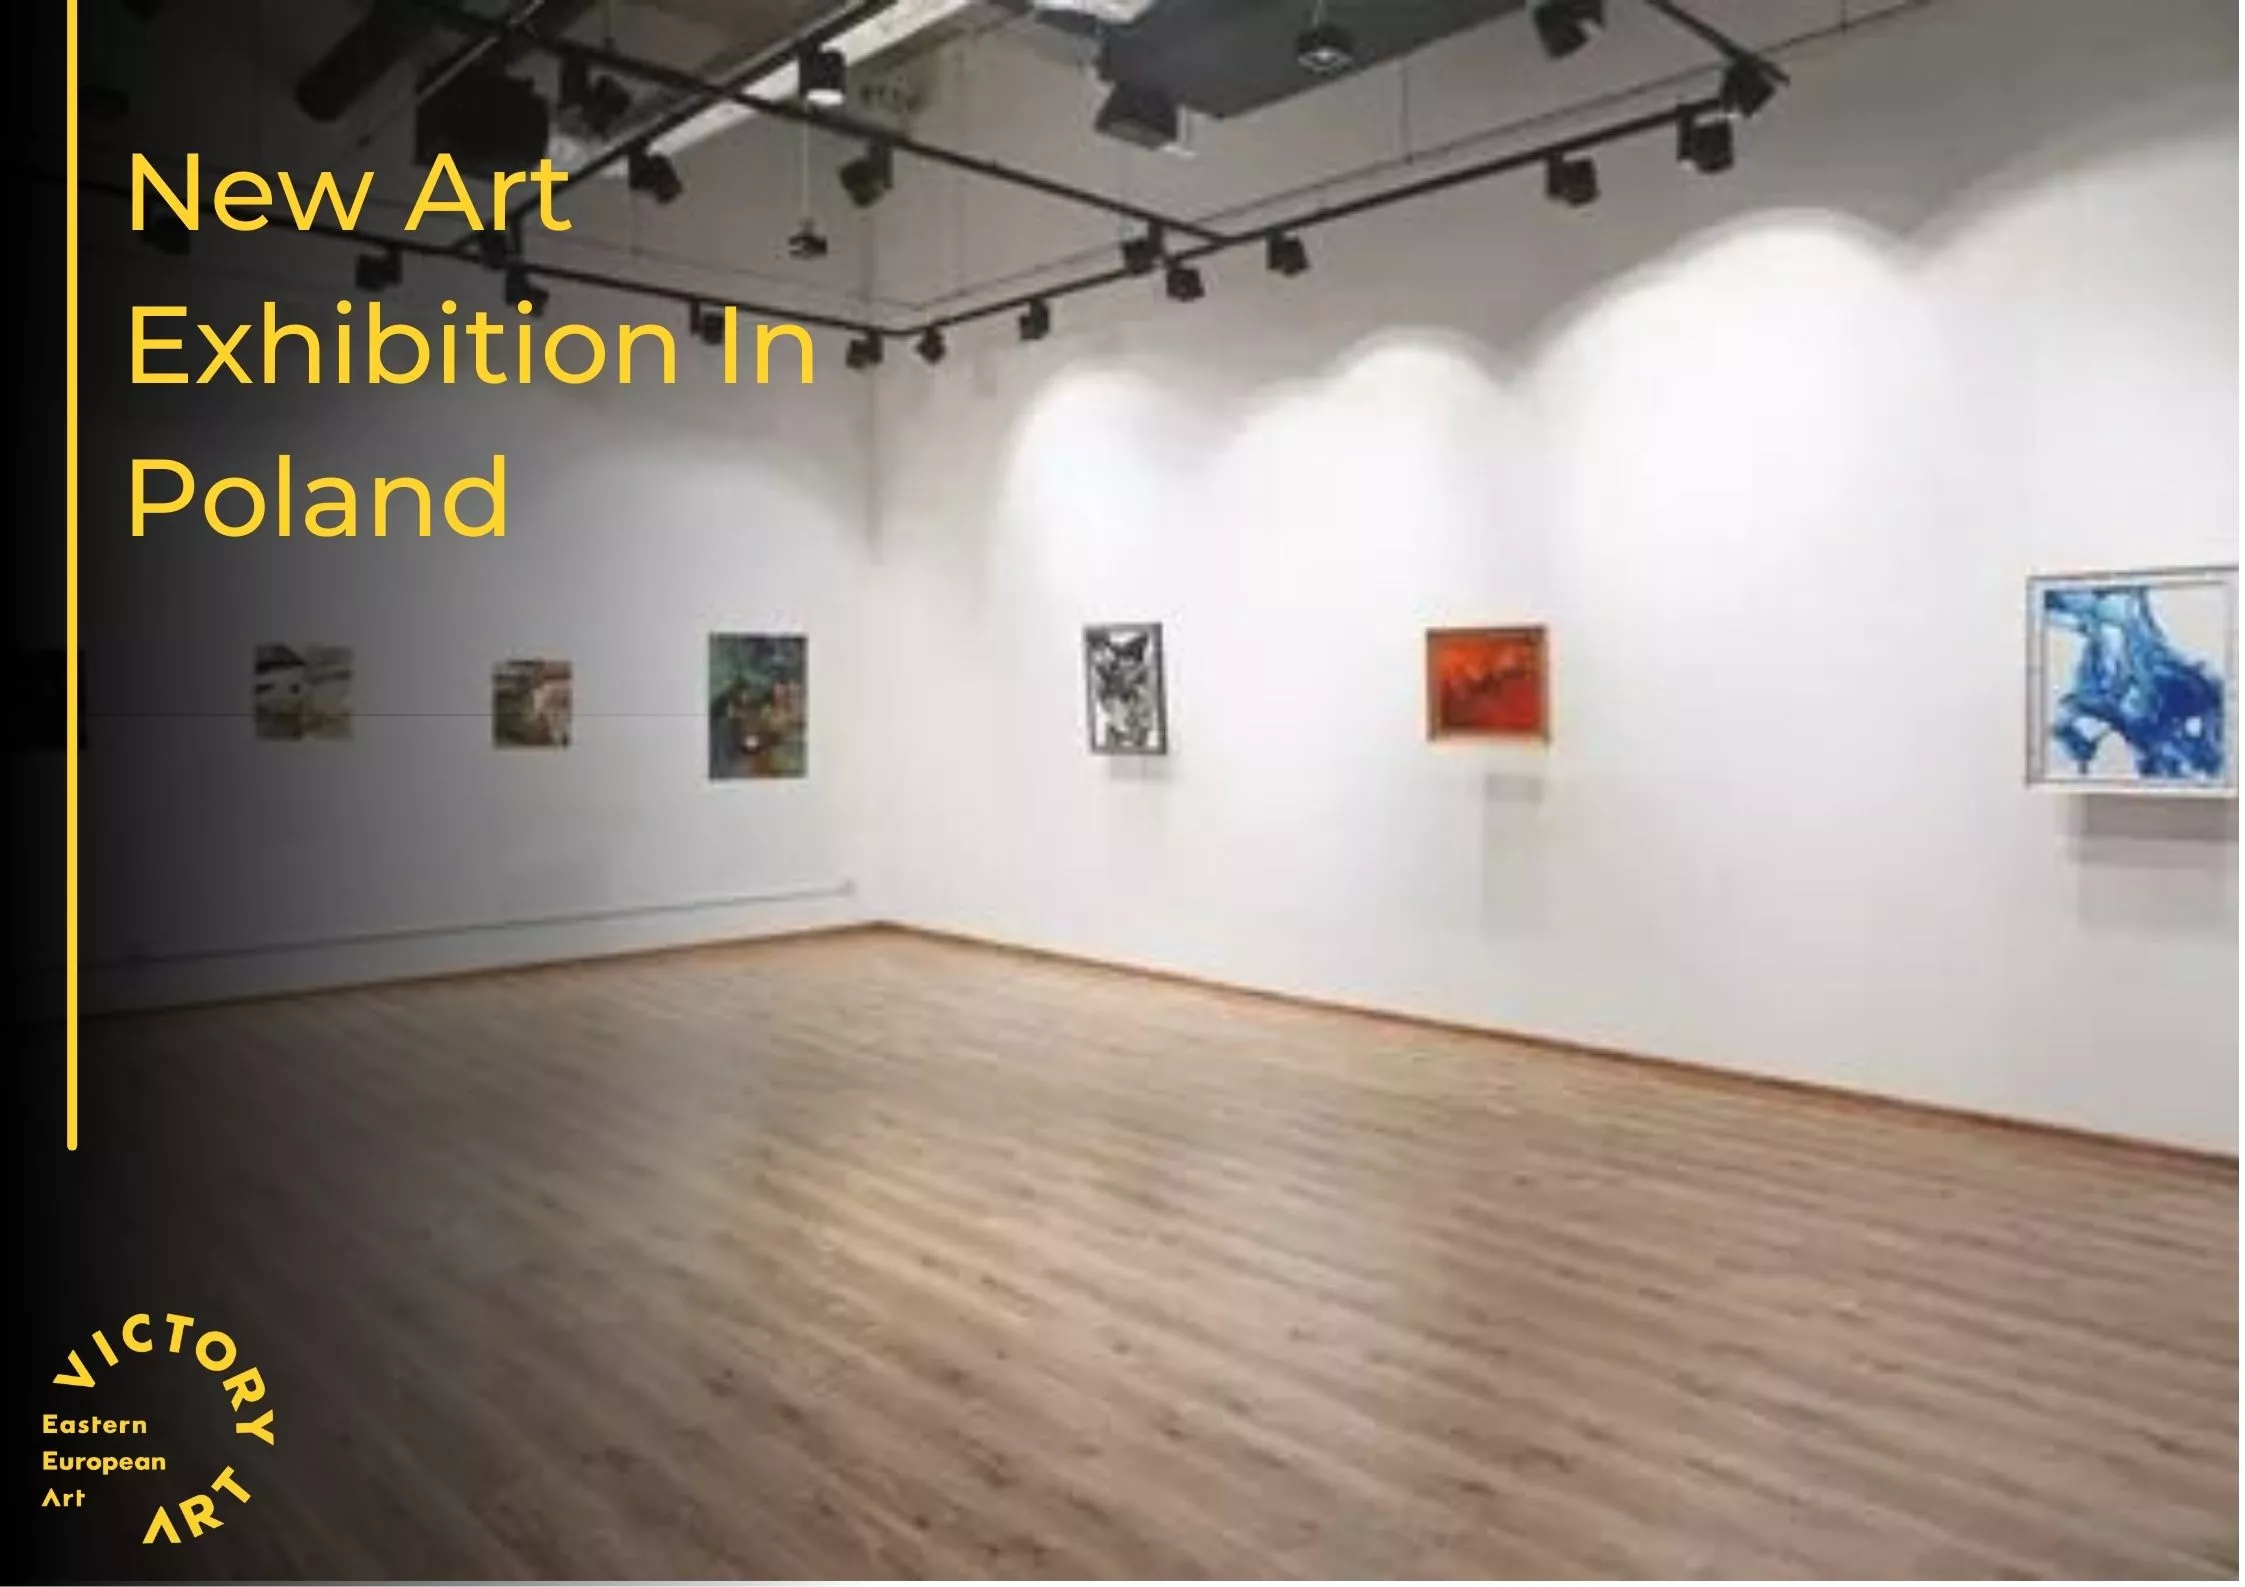 New Art Exhibition in Poland